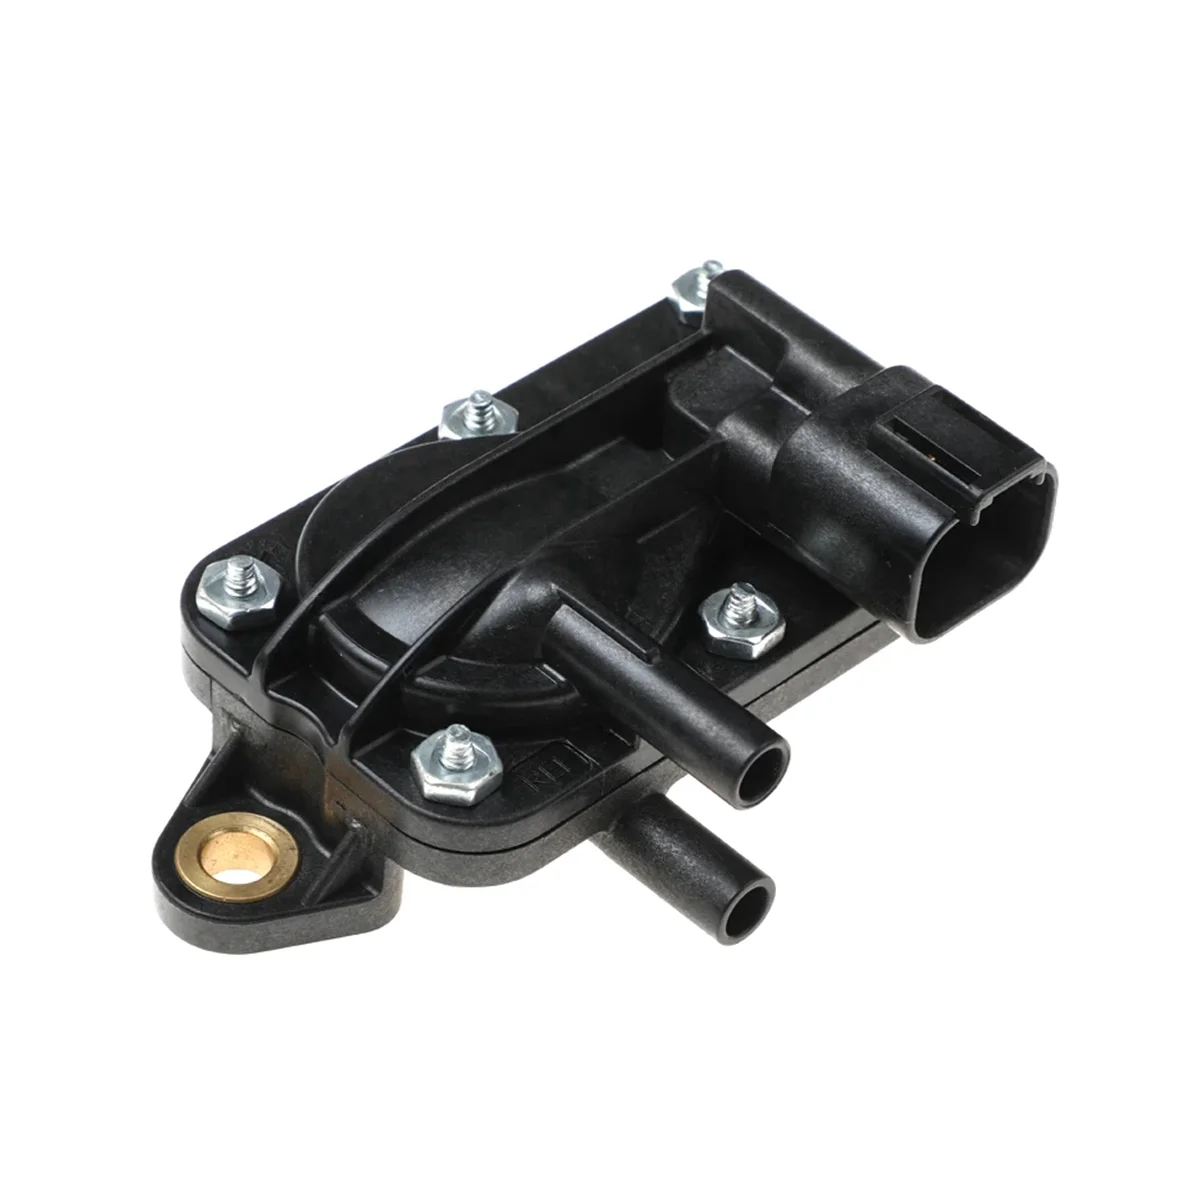 

2219914 2357734 Intake Pressure Sensor Differential Pressure Sensor Automotive for Scania T141Pr4 5 6